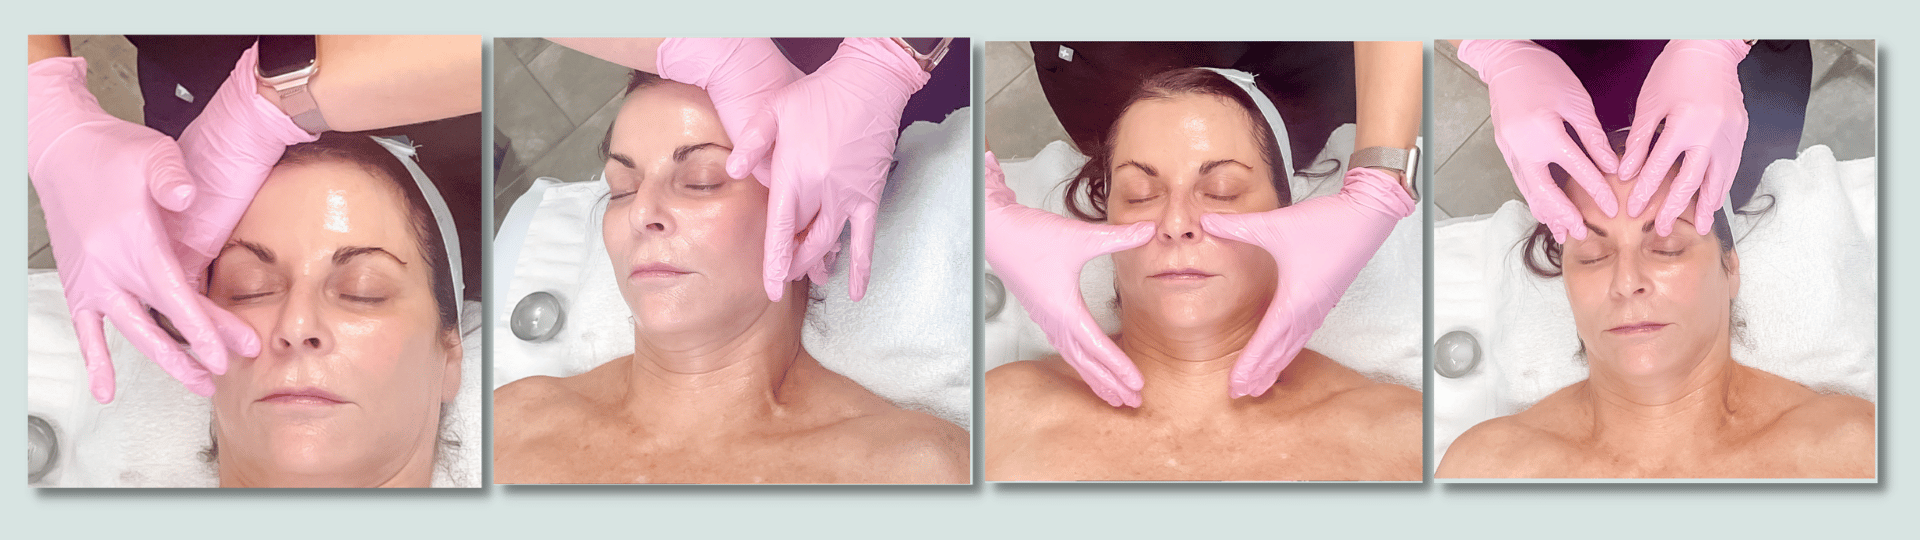 Valmont Facial Blog massage